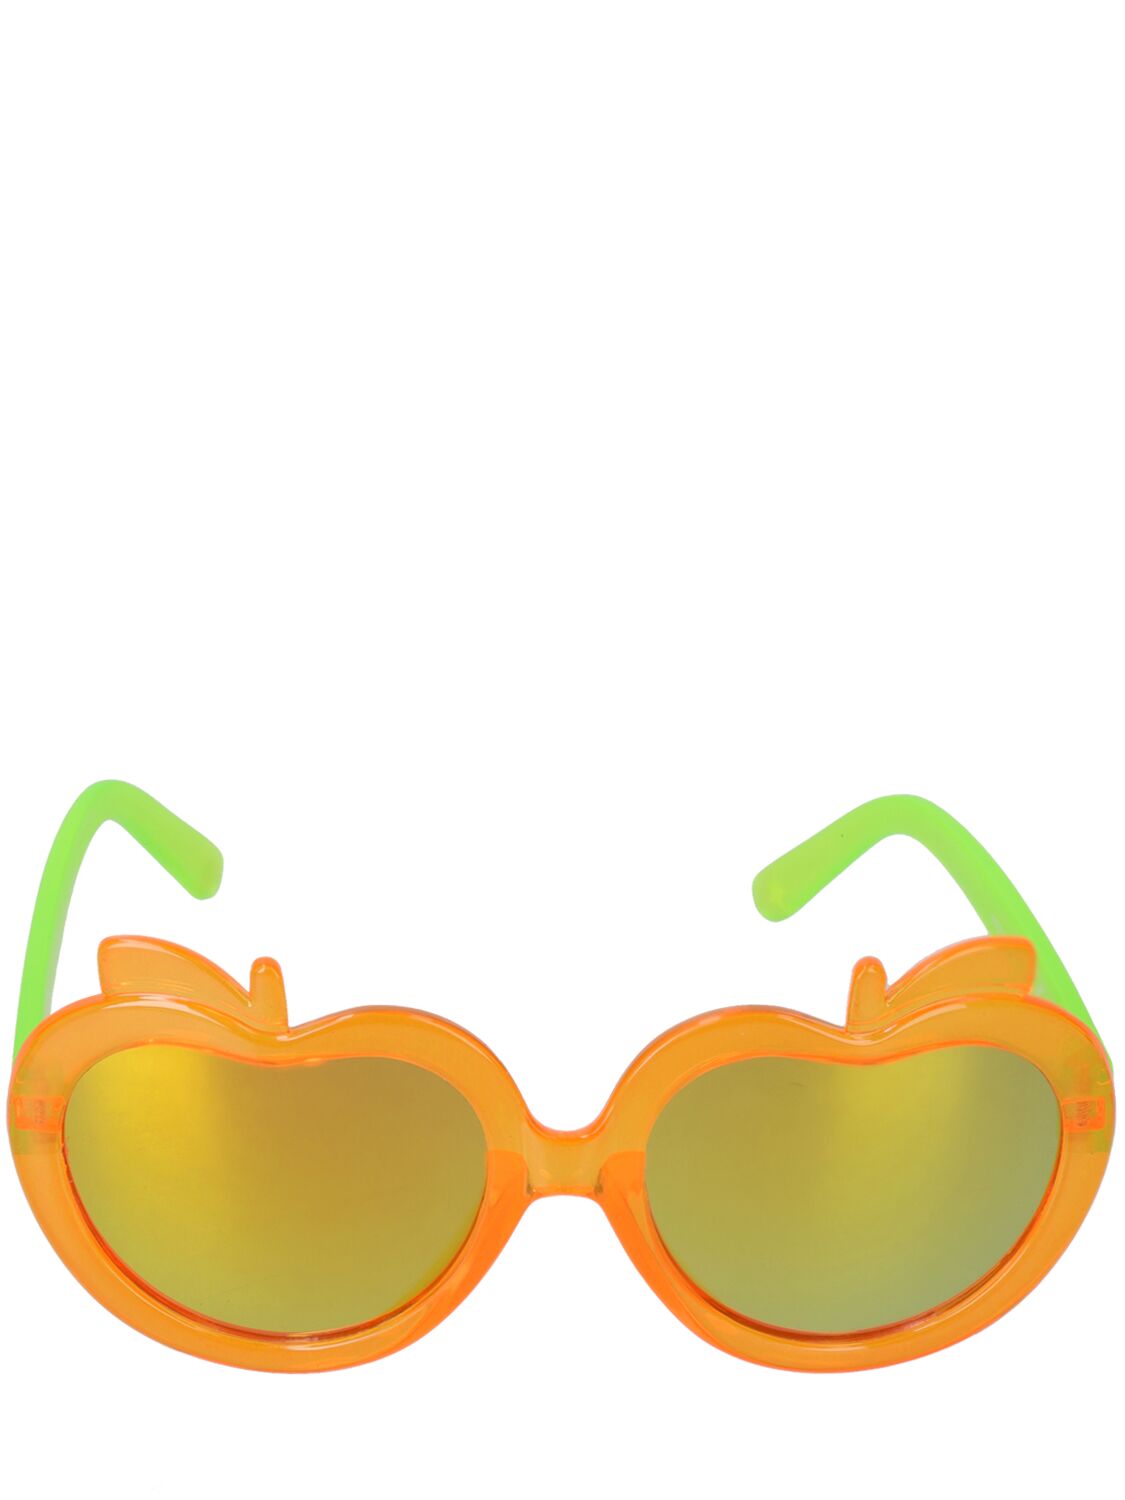 Image of Apple Polycarbonate Sunglasses